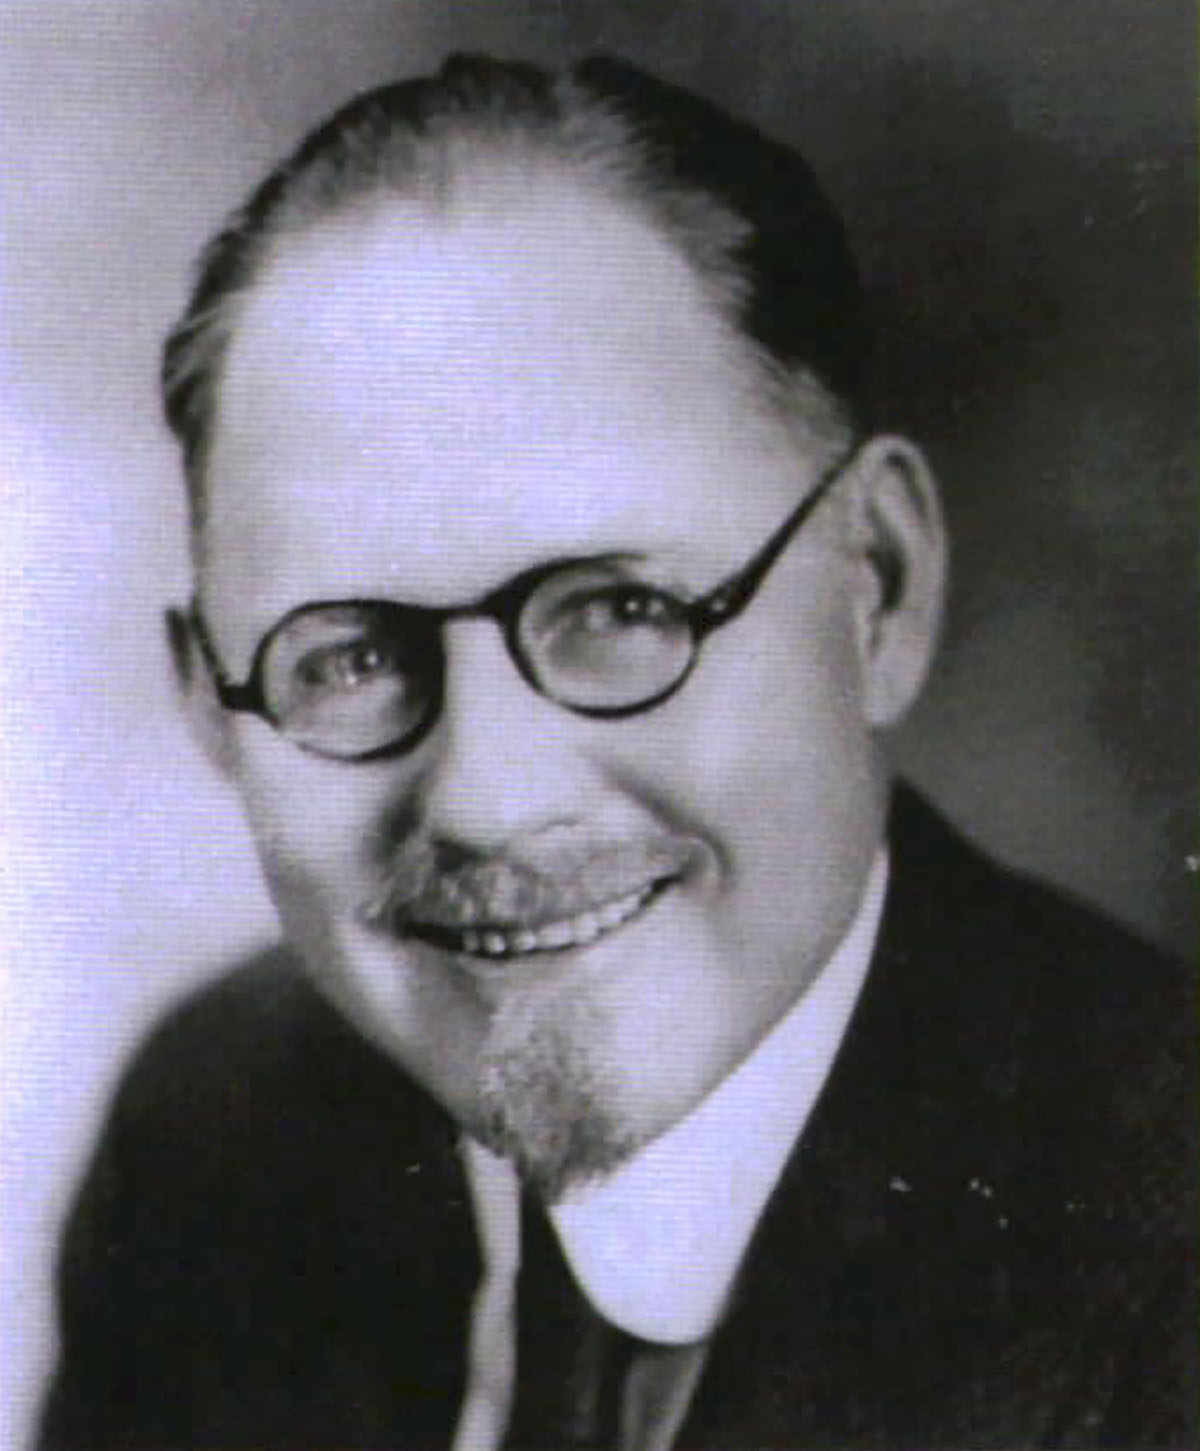 Portrait of a man wearing glasses